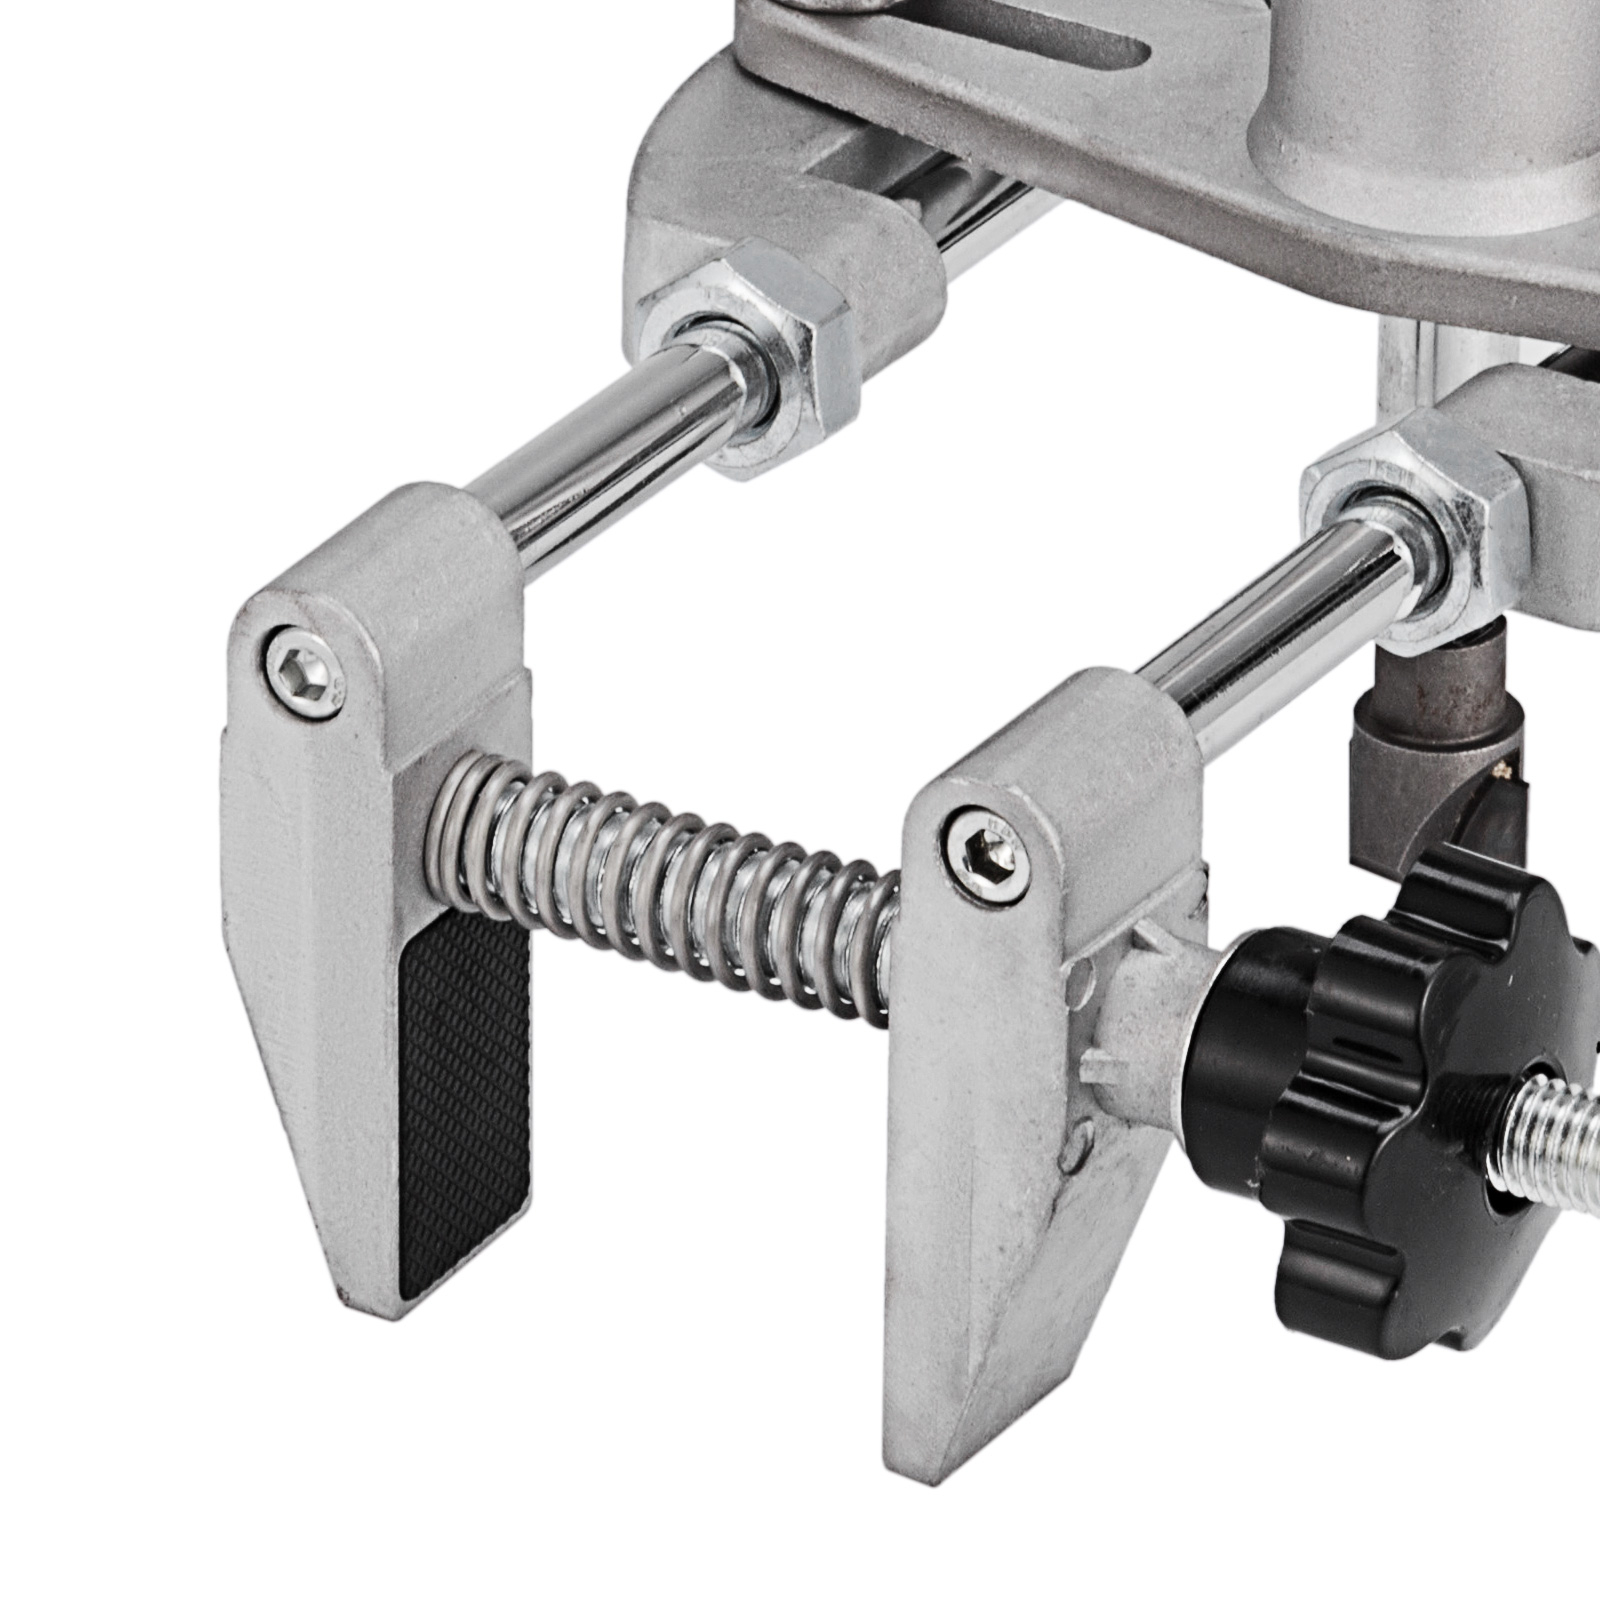 10MM Mortice Lock Fitting Jig Kit Carbide Tip Wood Cutter Door Lock Mortiser